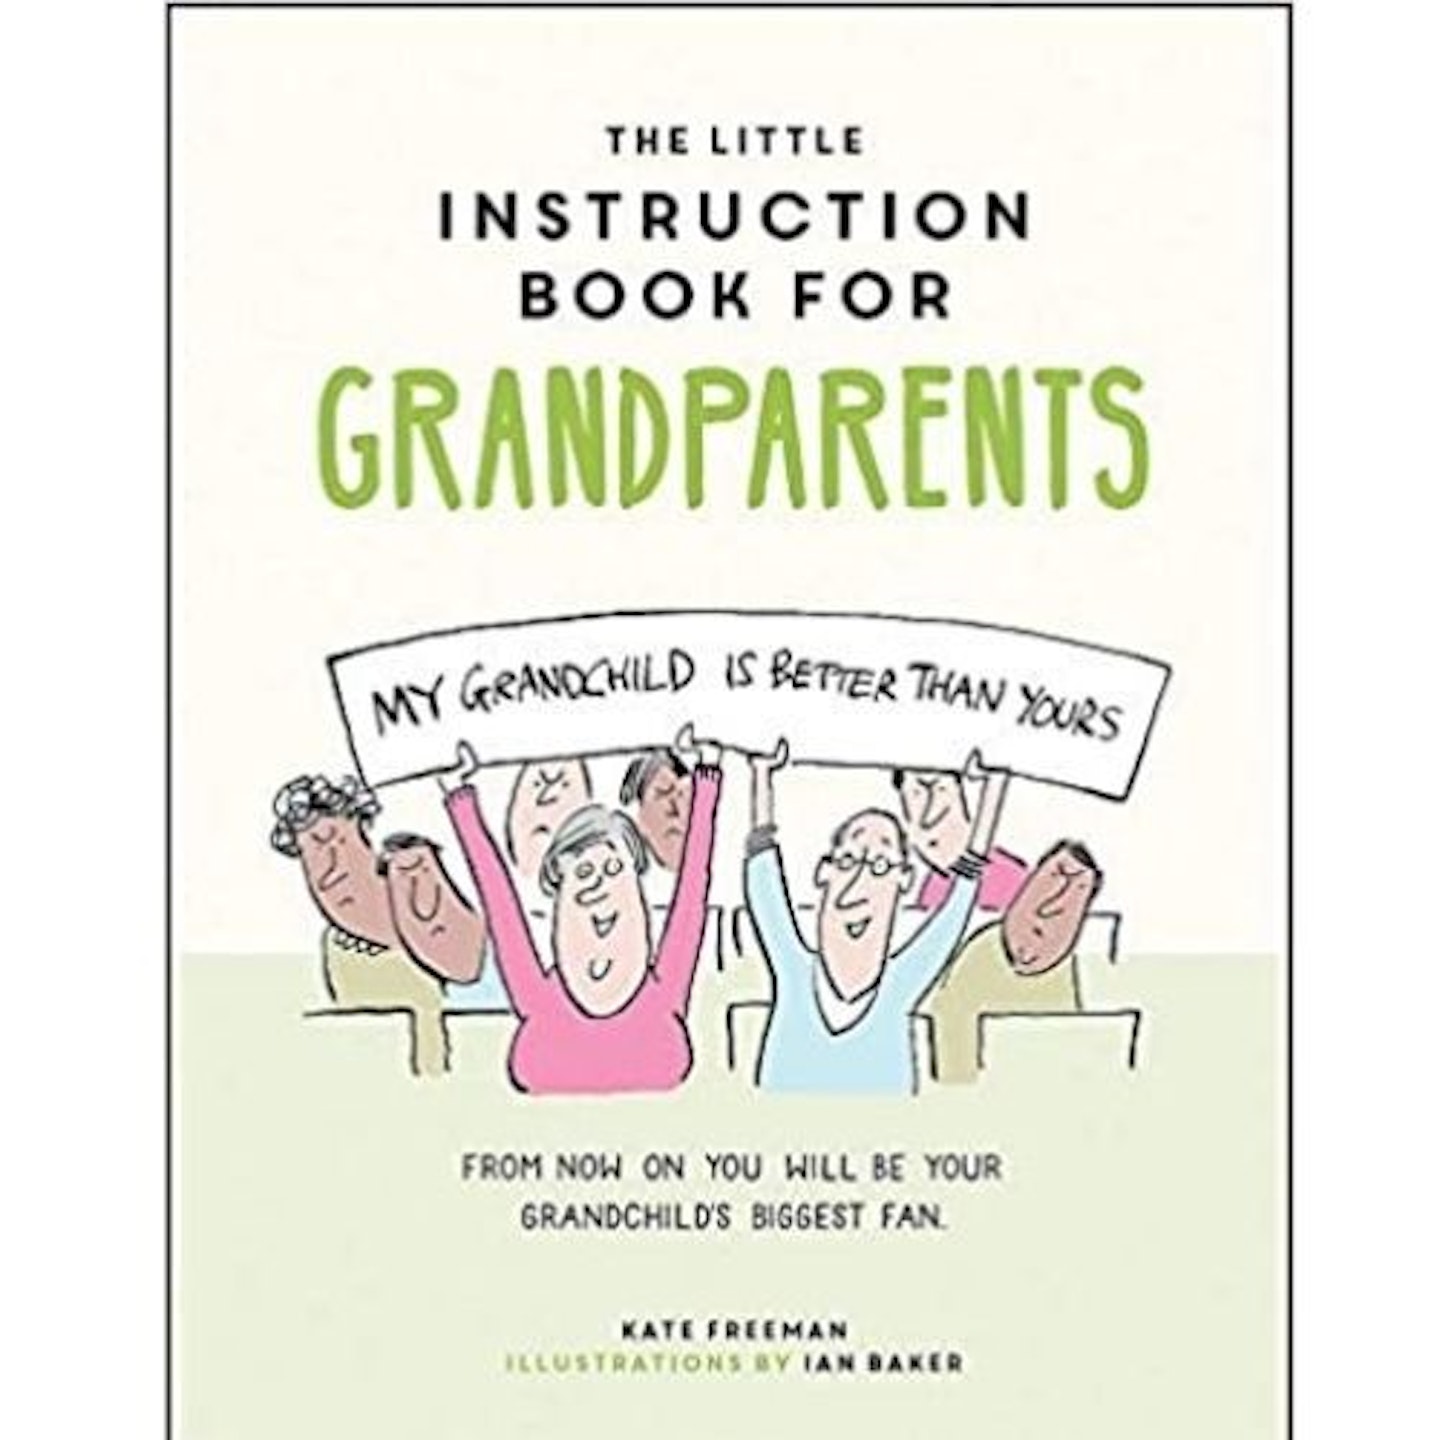 grandparents guide